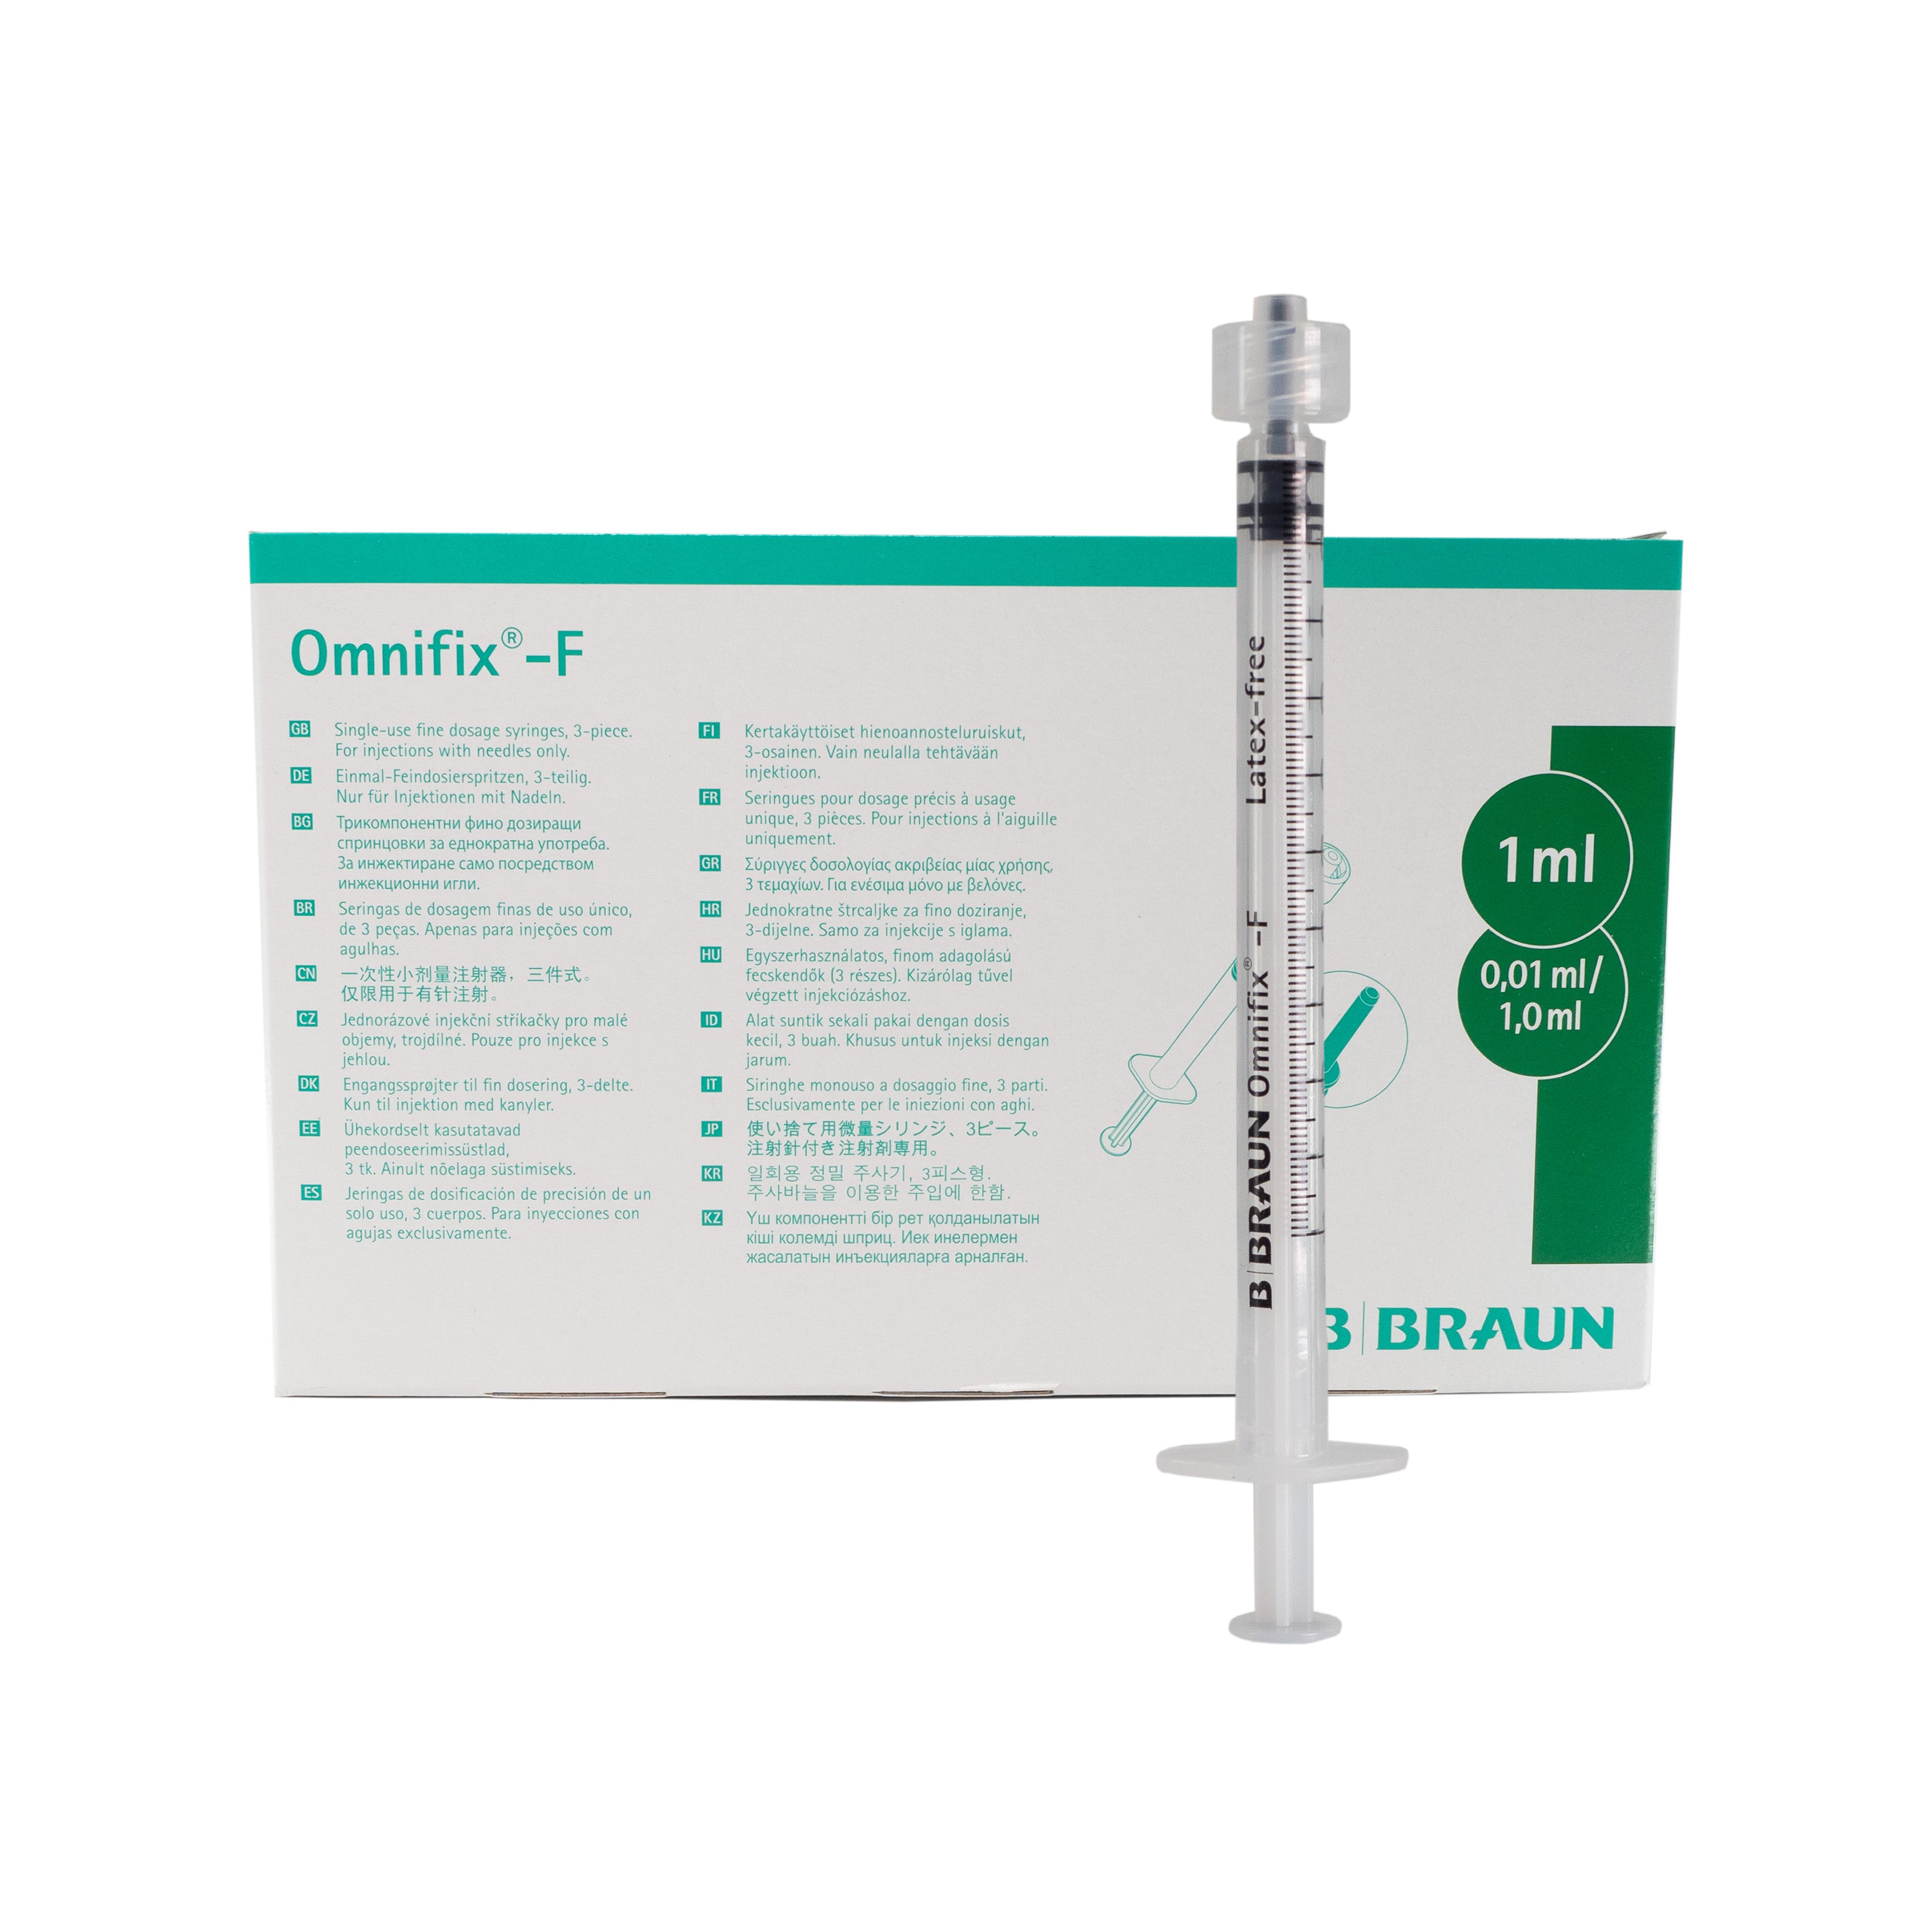 B. Braun 1ml Dose Saver Luer Lock Syringe – Precise Medical Supplies